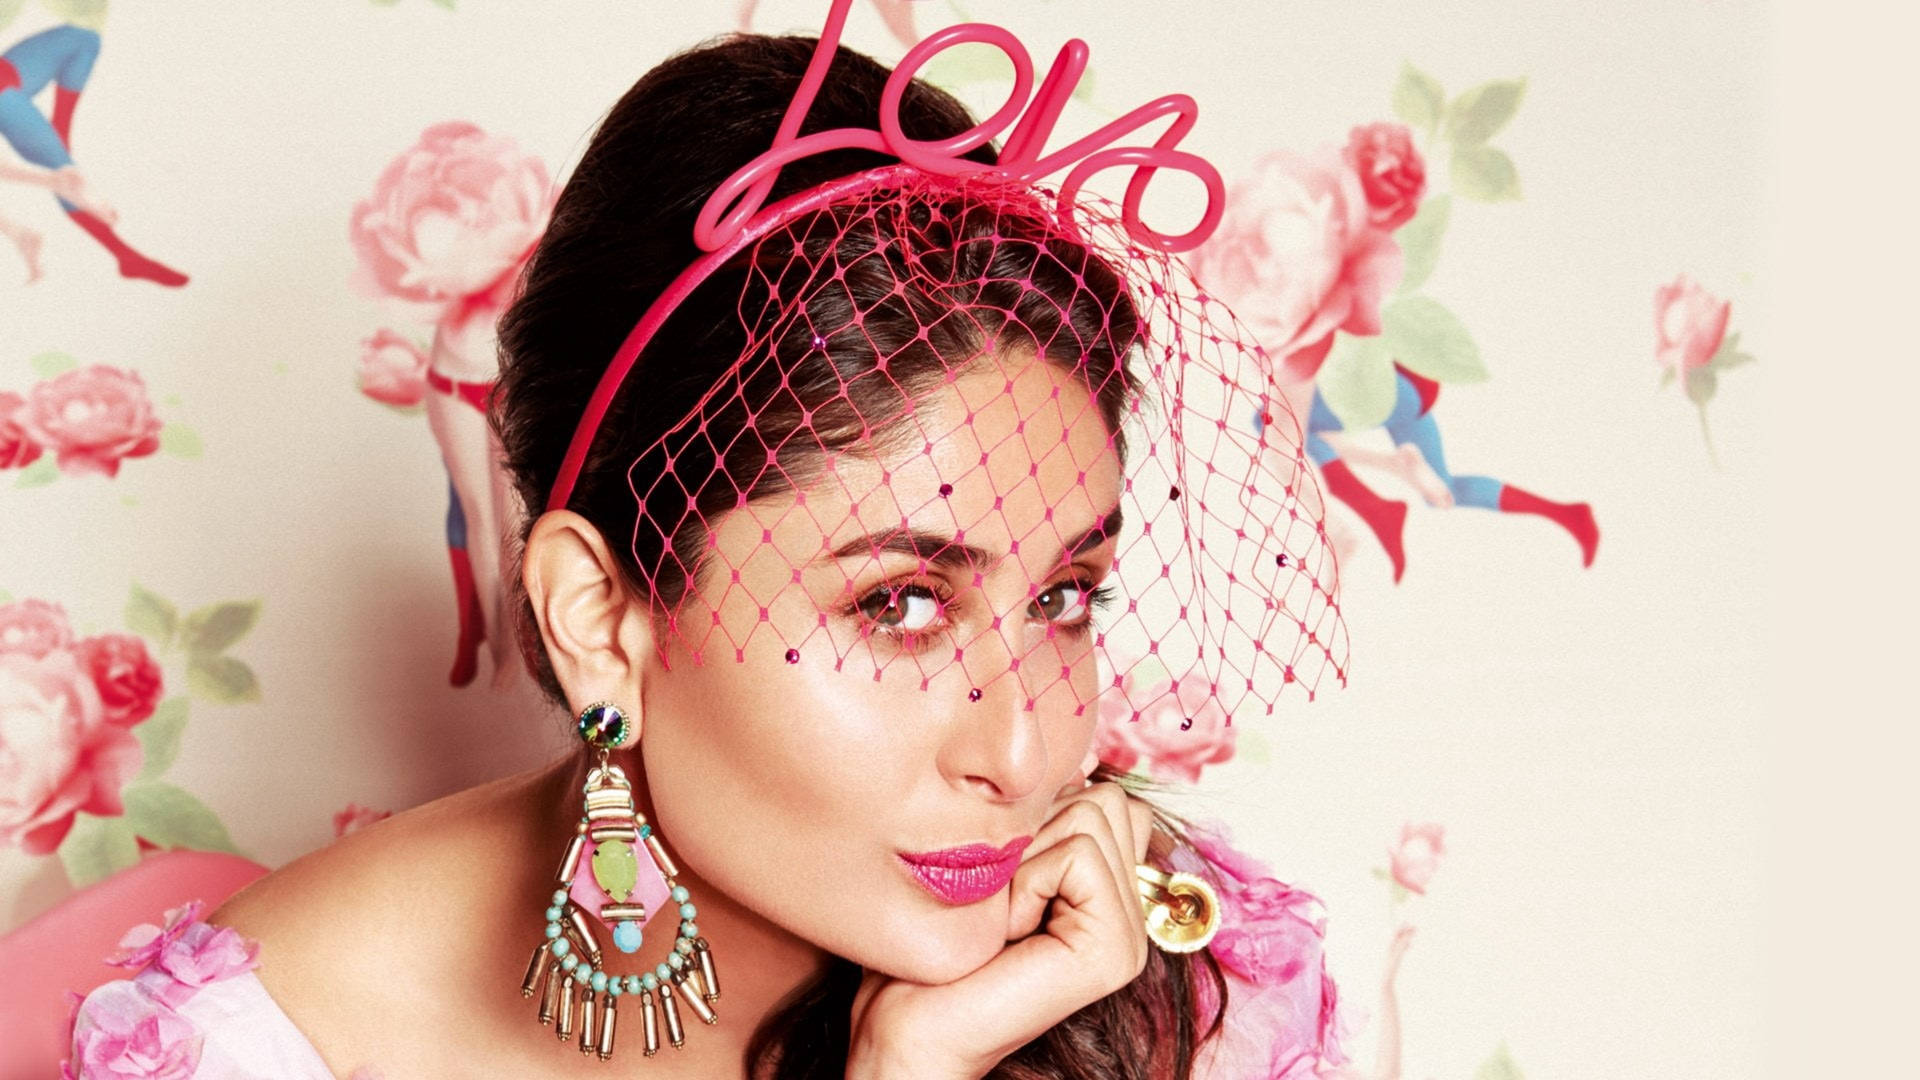 Girly Kareena Kapoor Vogue Fotosession Wallpaper